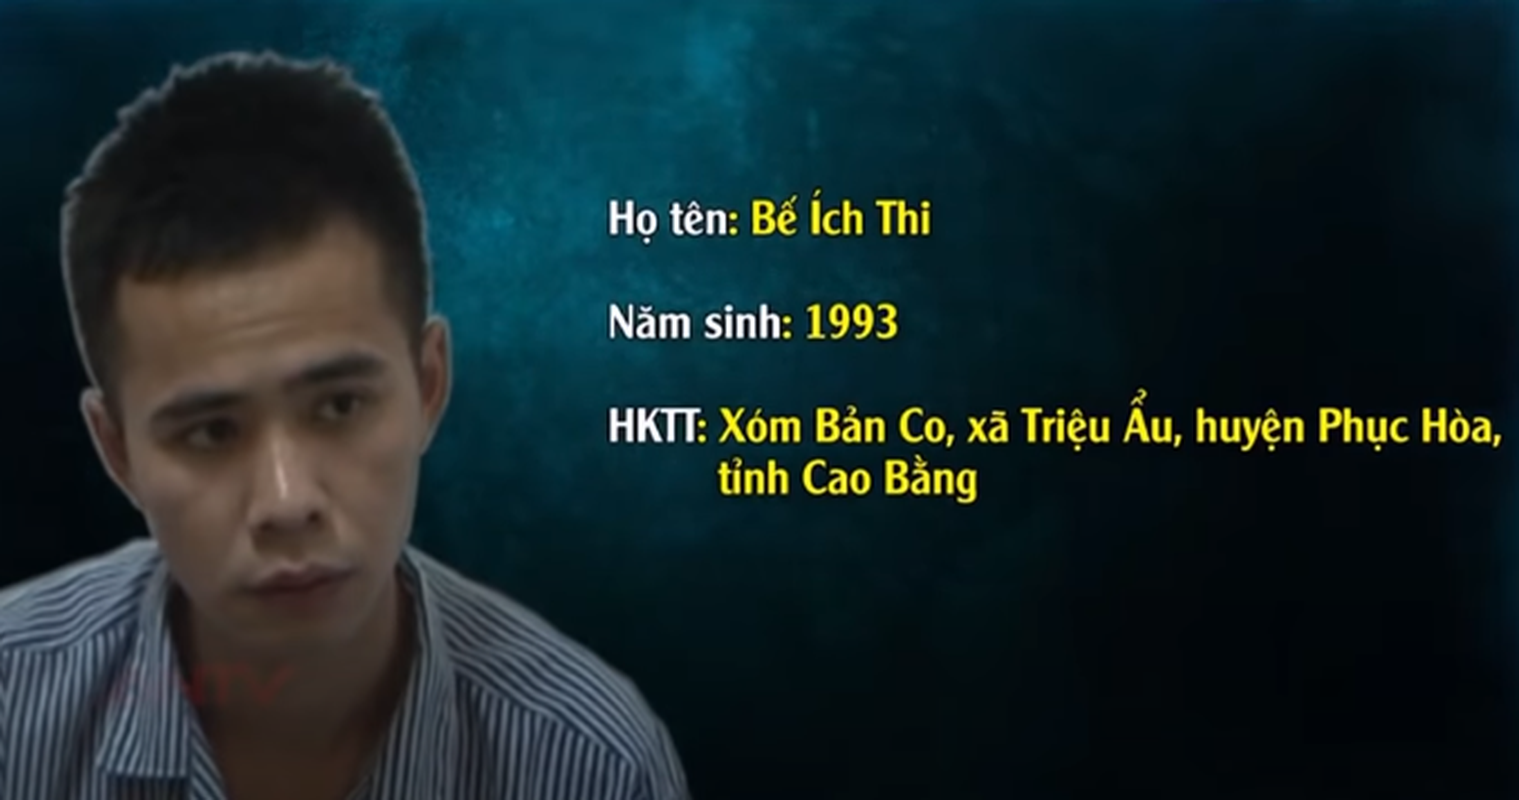 Hanh trinh pha an: Bi an nam bao ve bi phan thay, cho vao bao-Hinh-9